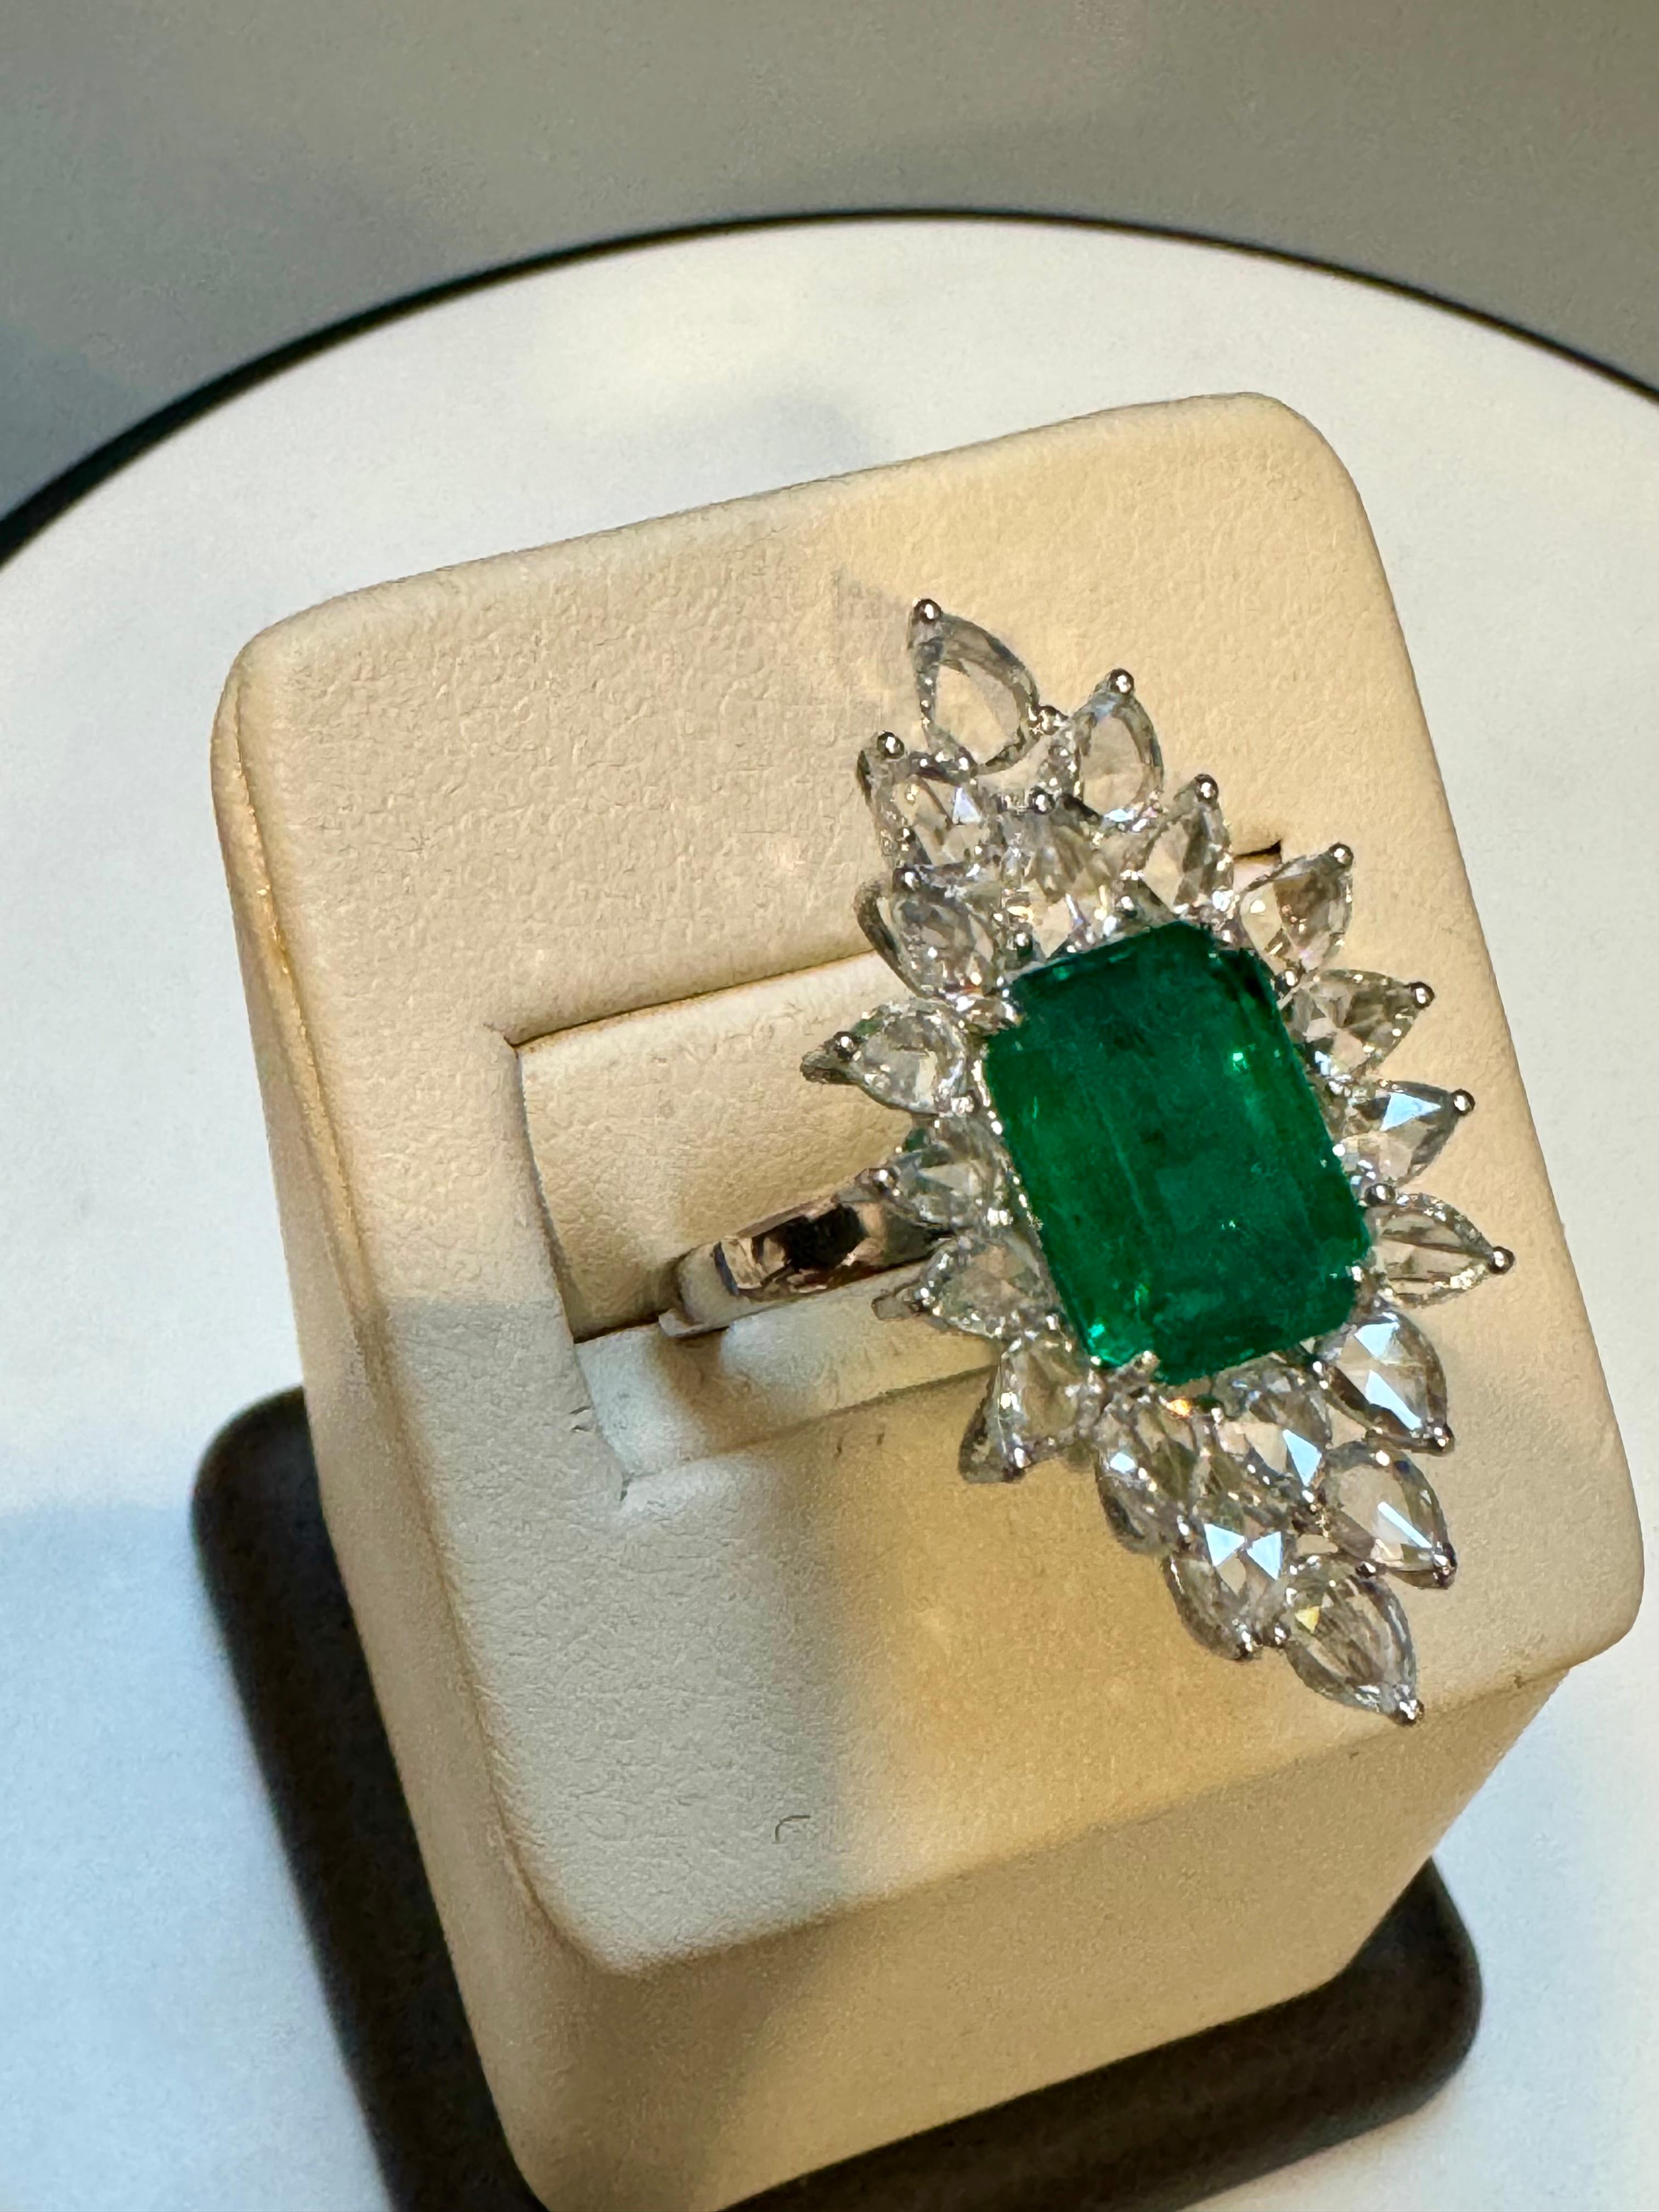 4Ct Finest Zambian Emerald Cut Emerald & 2.5Ct Diamond Ring, 18 Kt Gold Size 6.5 For Sale 2